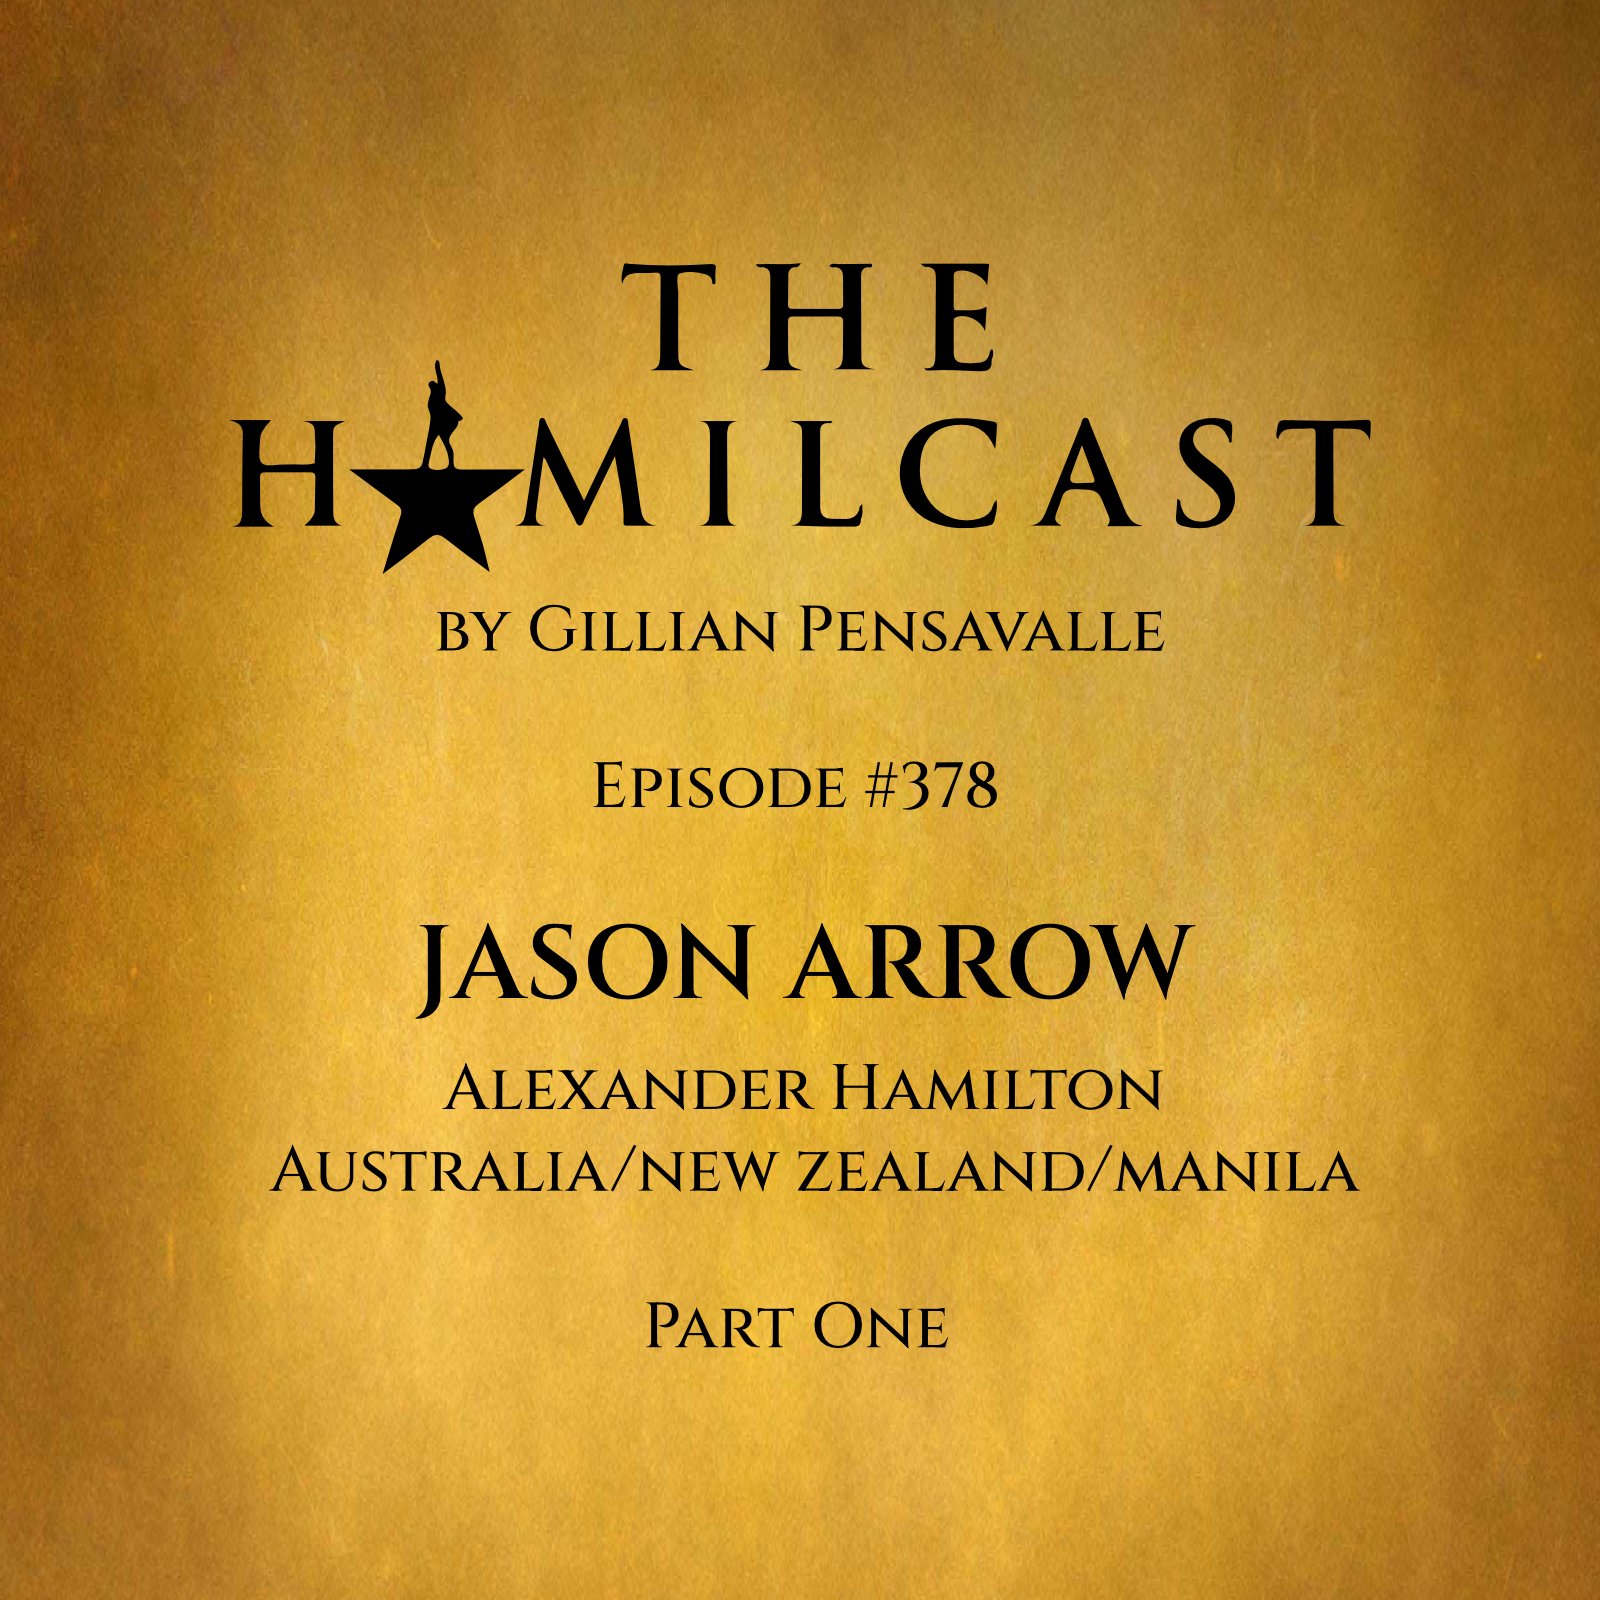 Jason Arrow. Alexander Hamilton in Australia, New Zealand, and Manila. Part One.